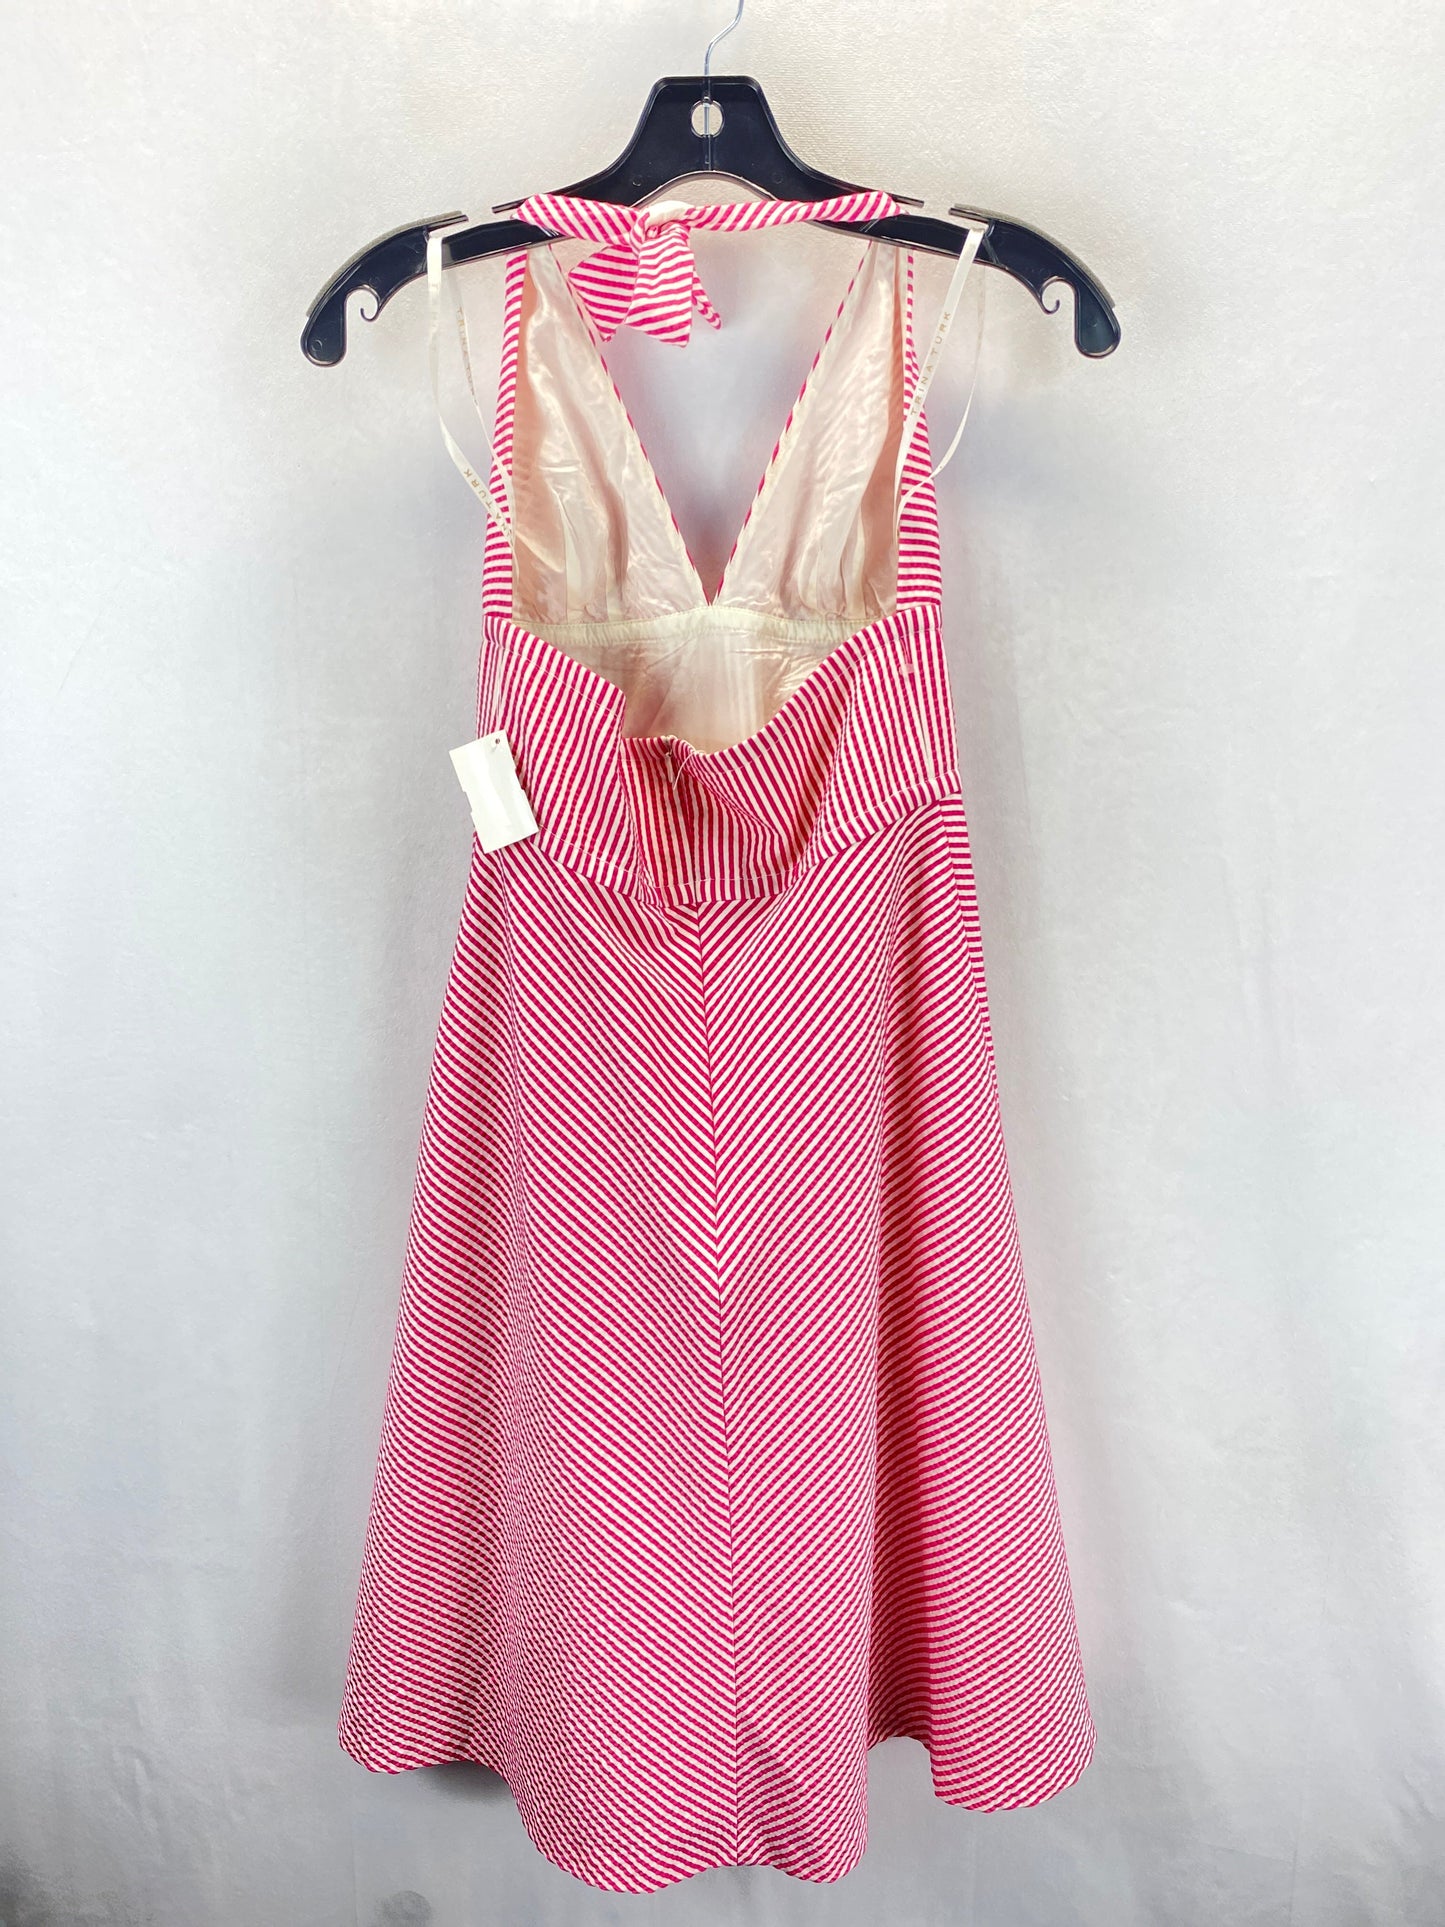 Dress Designer By Trina Turk  Size: 4